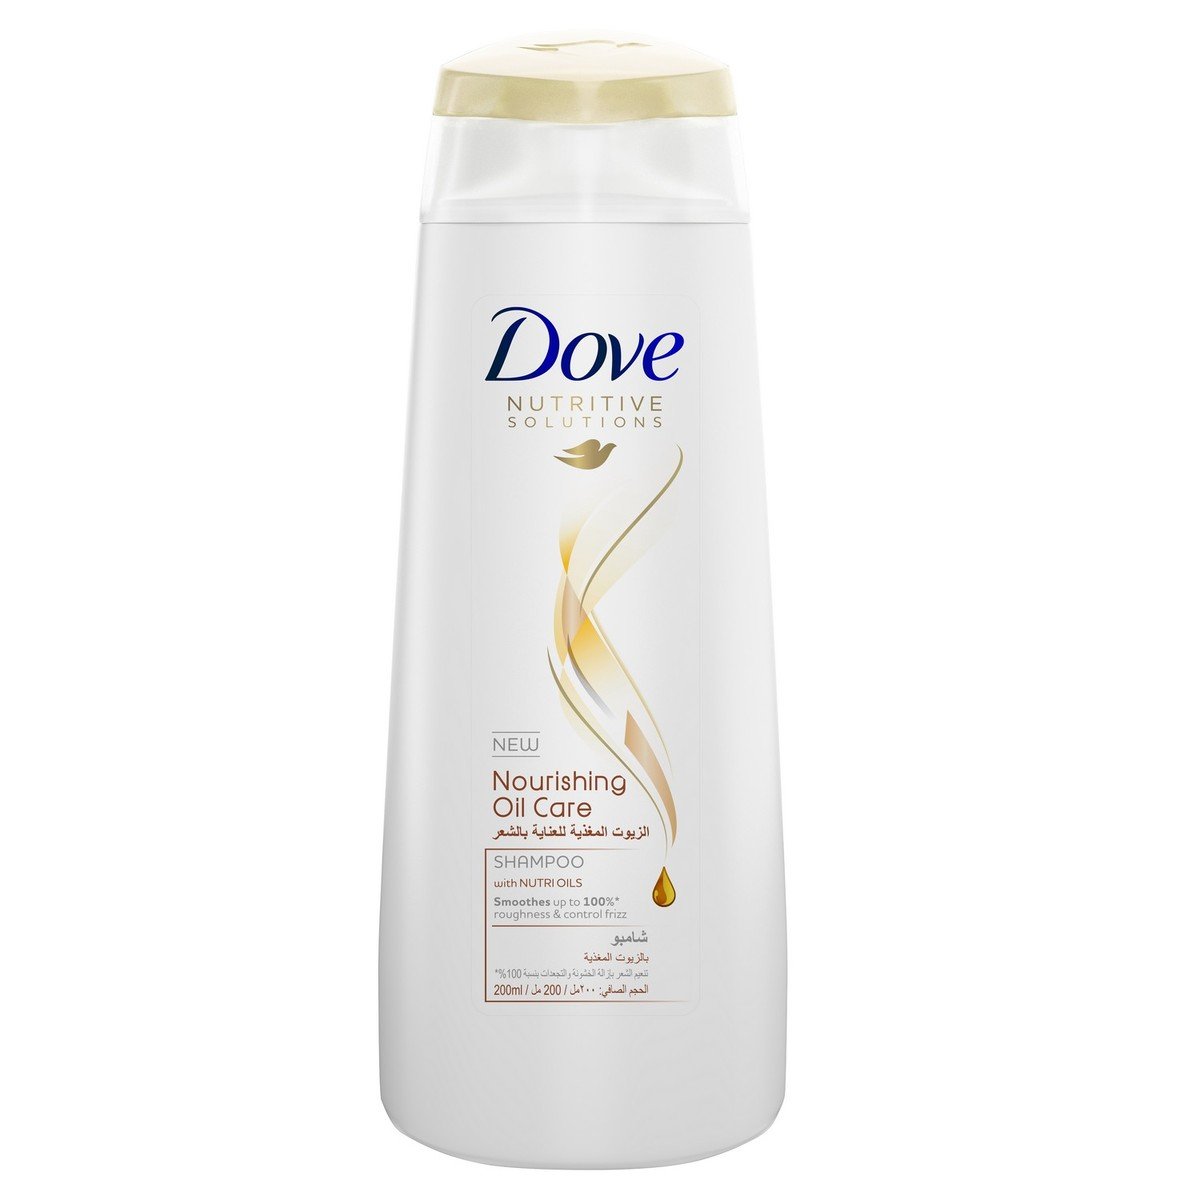 Dove Nutritive Solutions Nourishing Oil Care Shampoo 200 ml